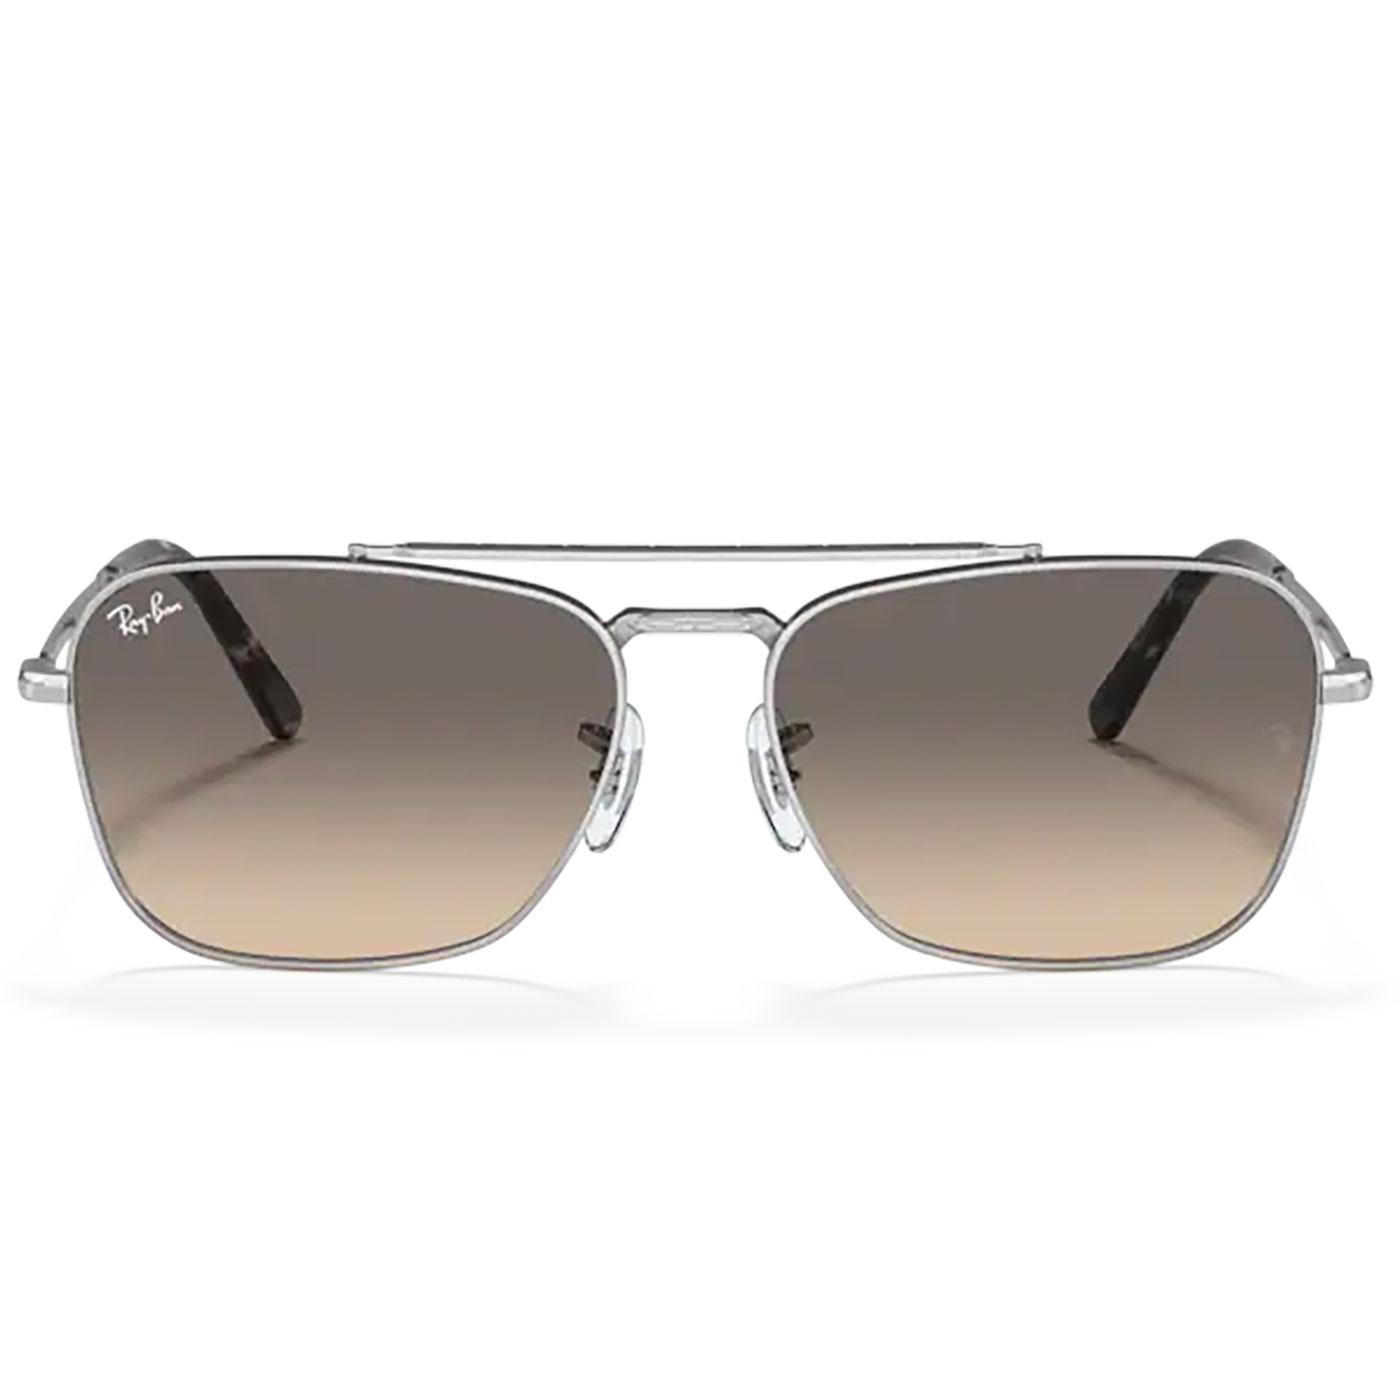 New Caravan RAY-BAN Retro Mod Sunglasses Silver